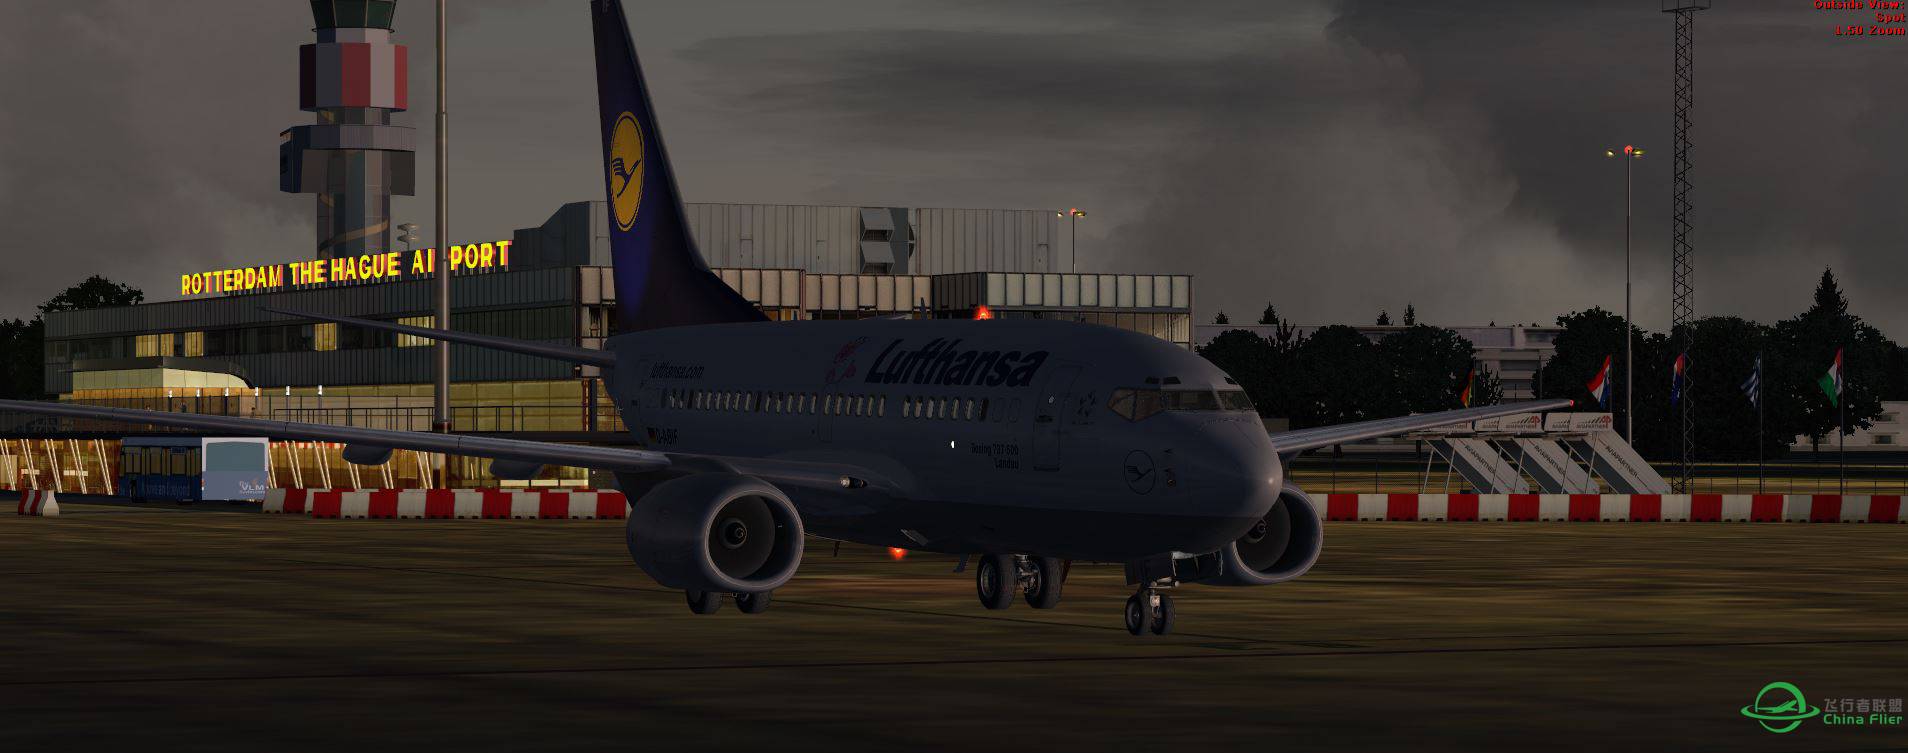 B737 Lufthansa-1259 